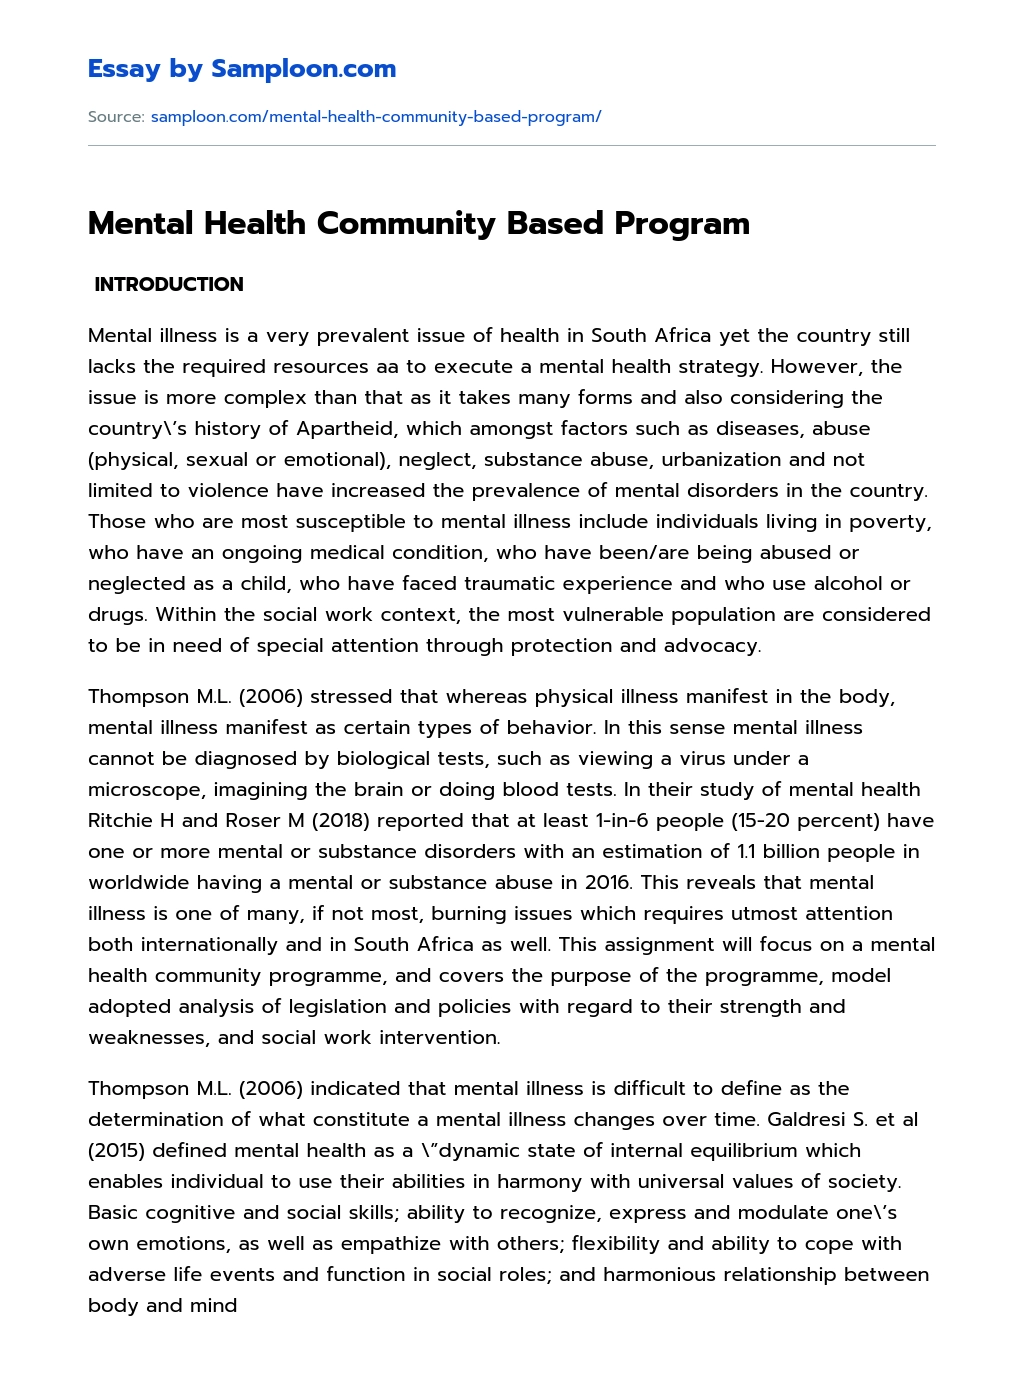 Mental Health Community Based Program essay